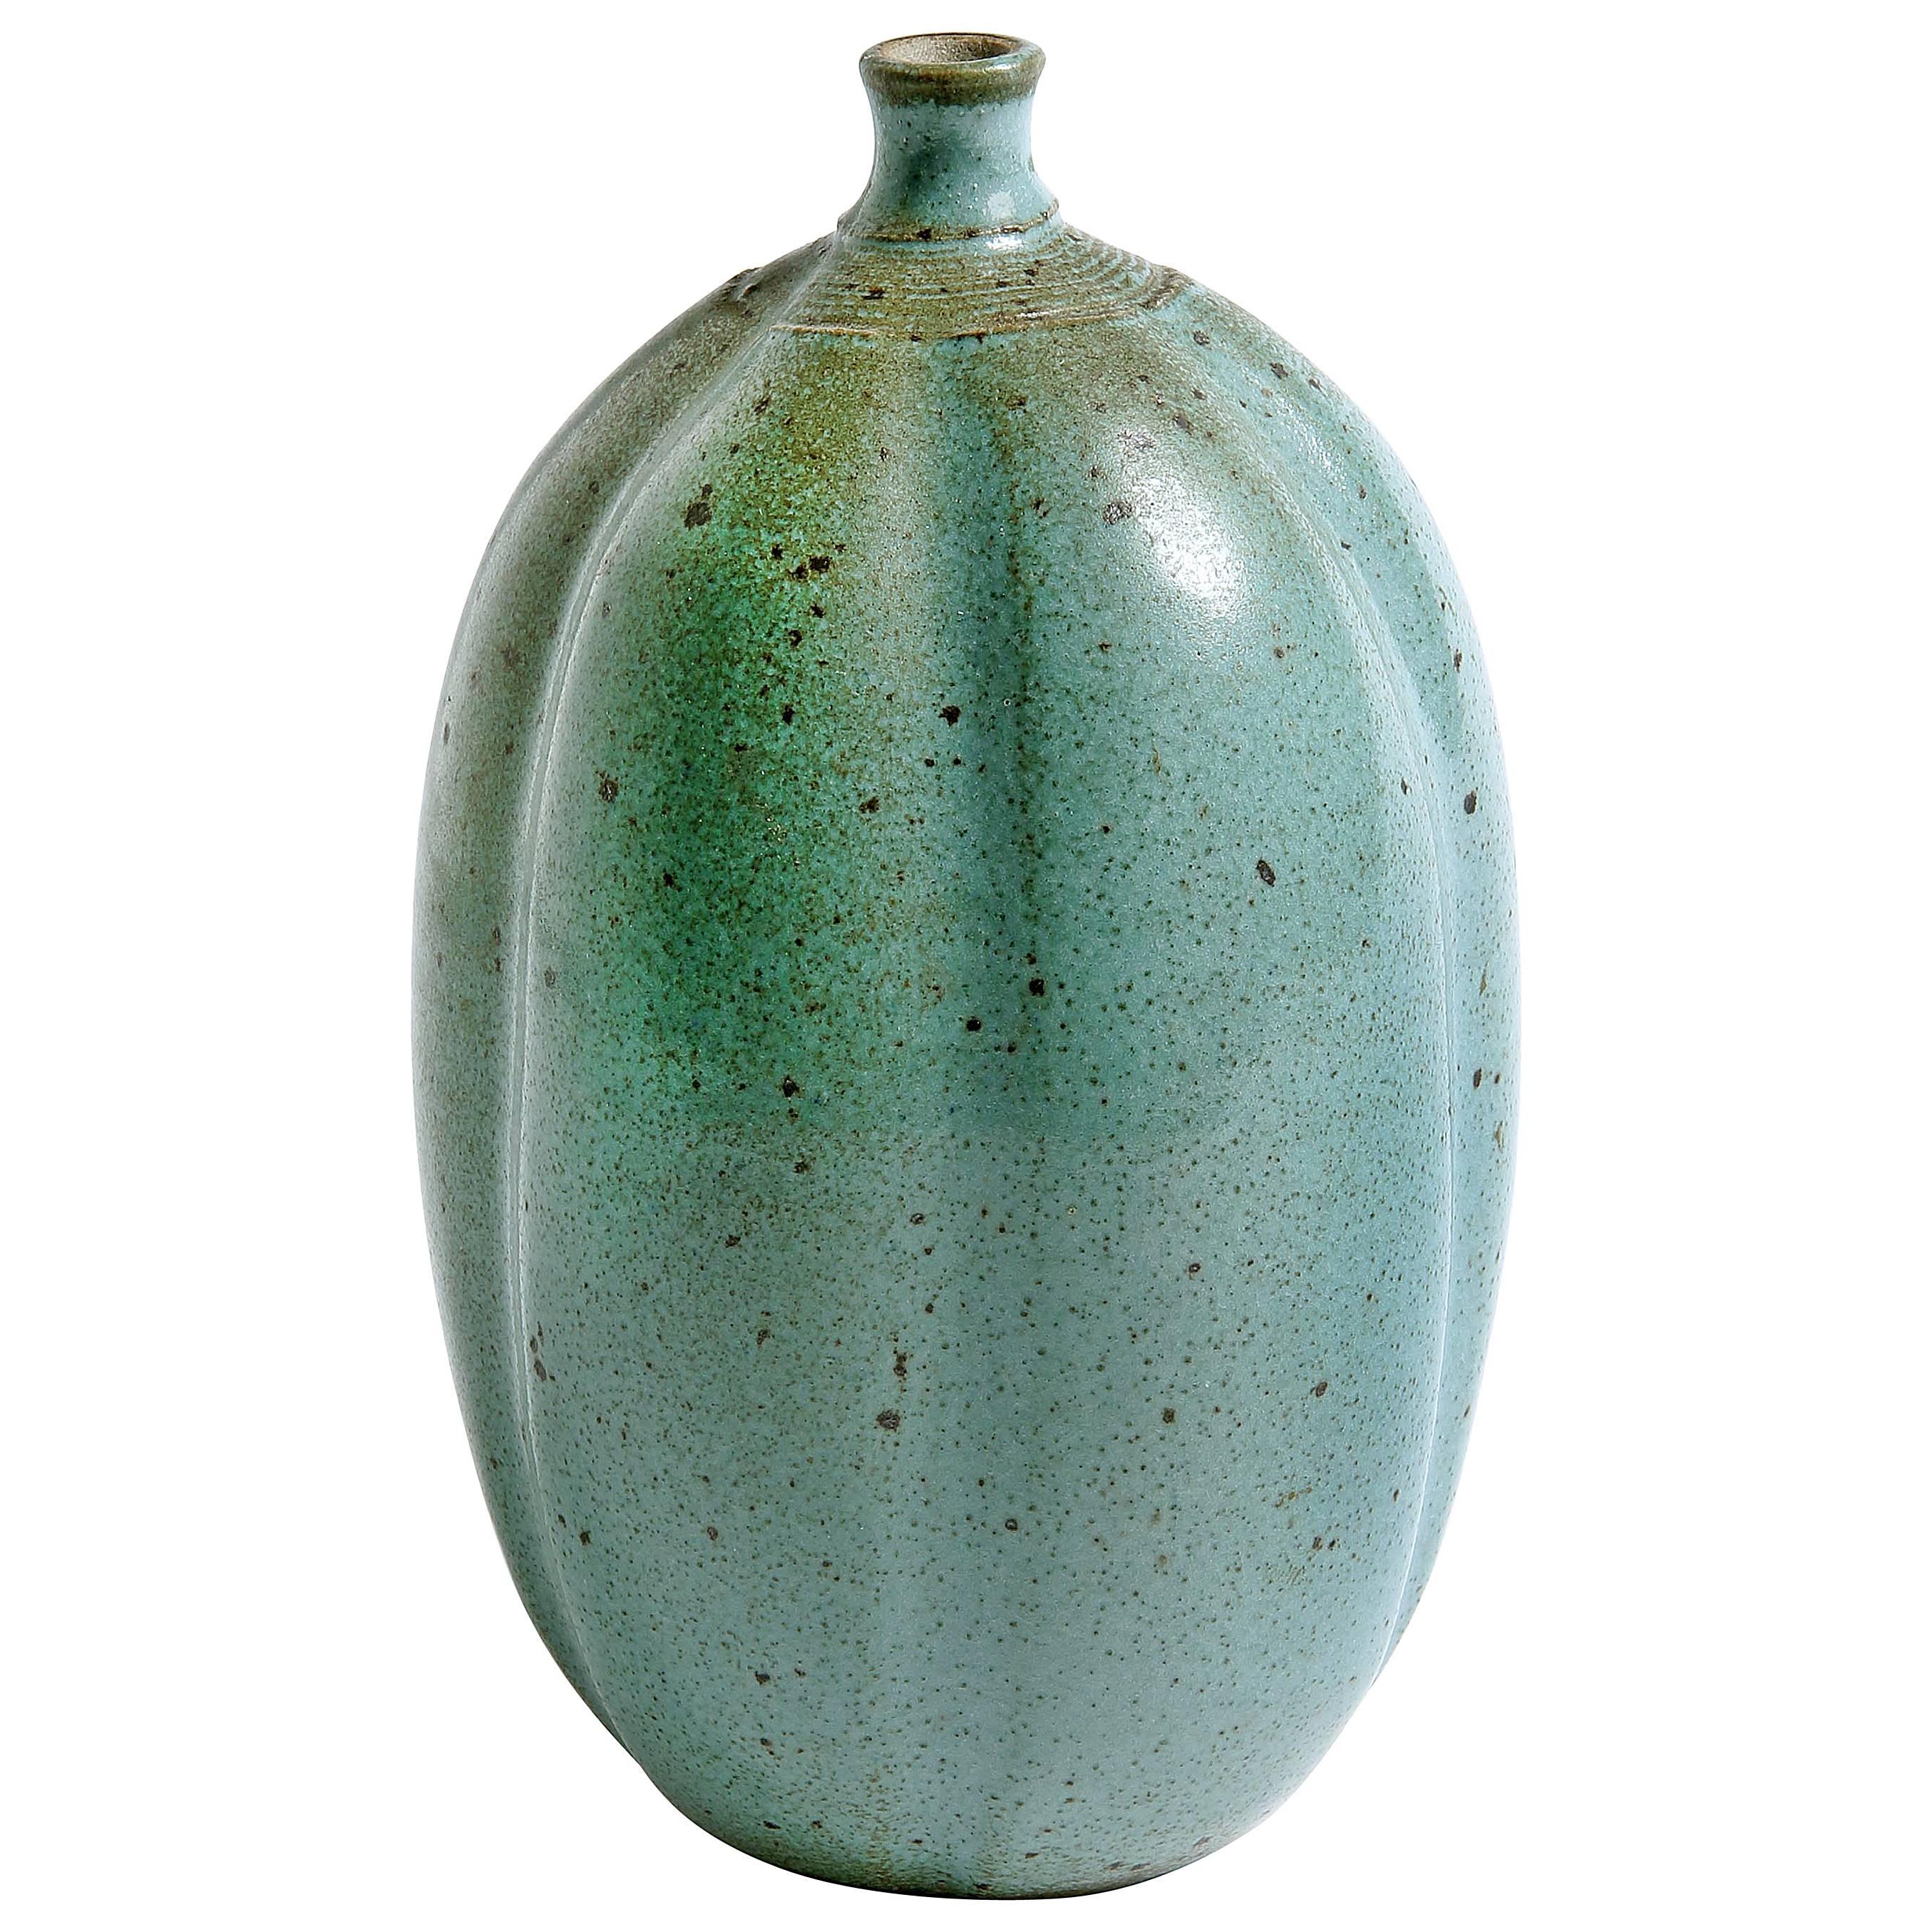 Ceramic Vase with Blue/Green Glaze